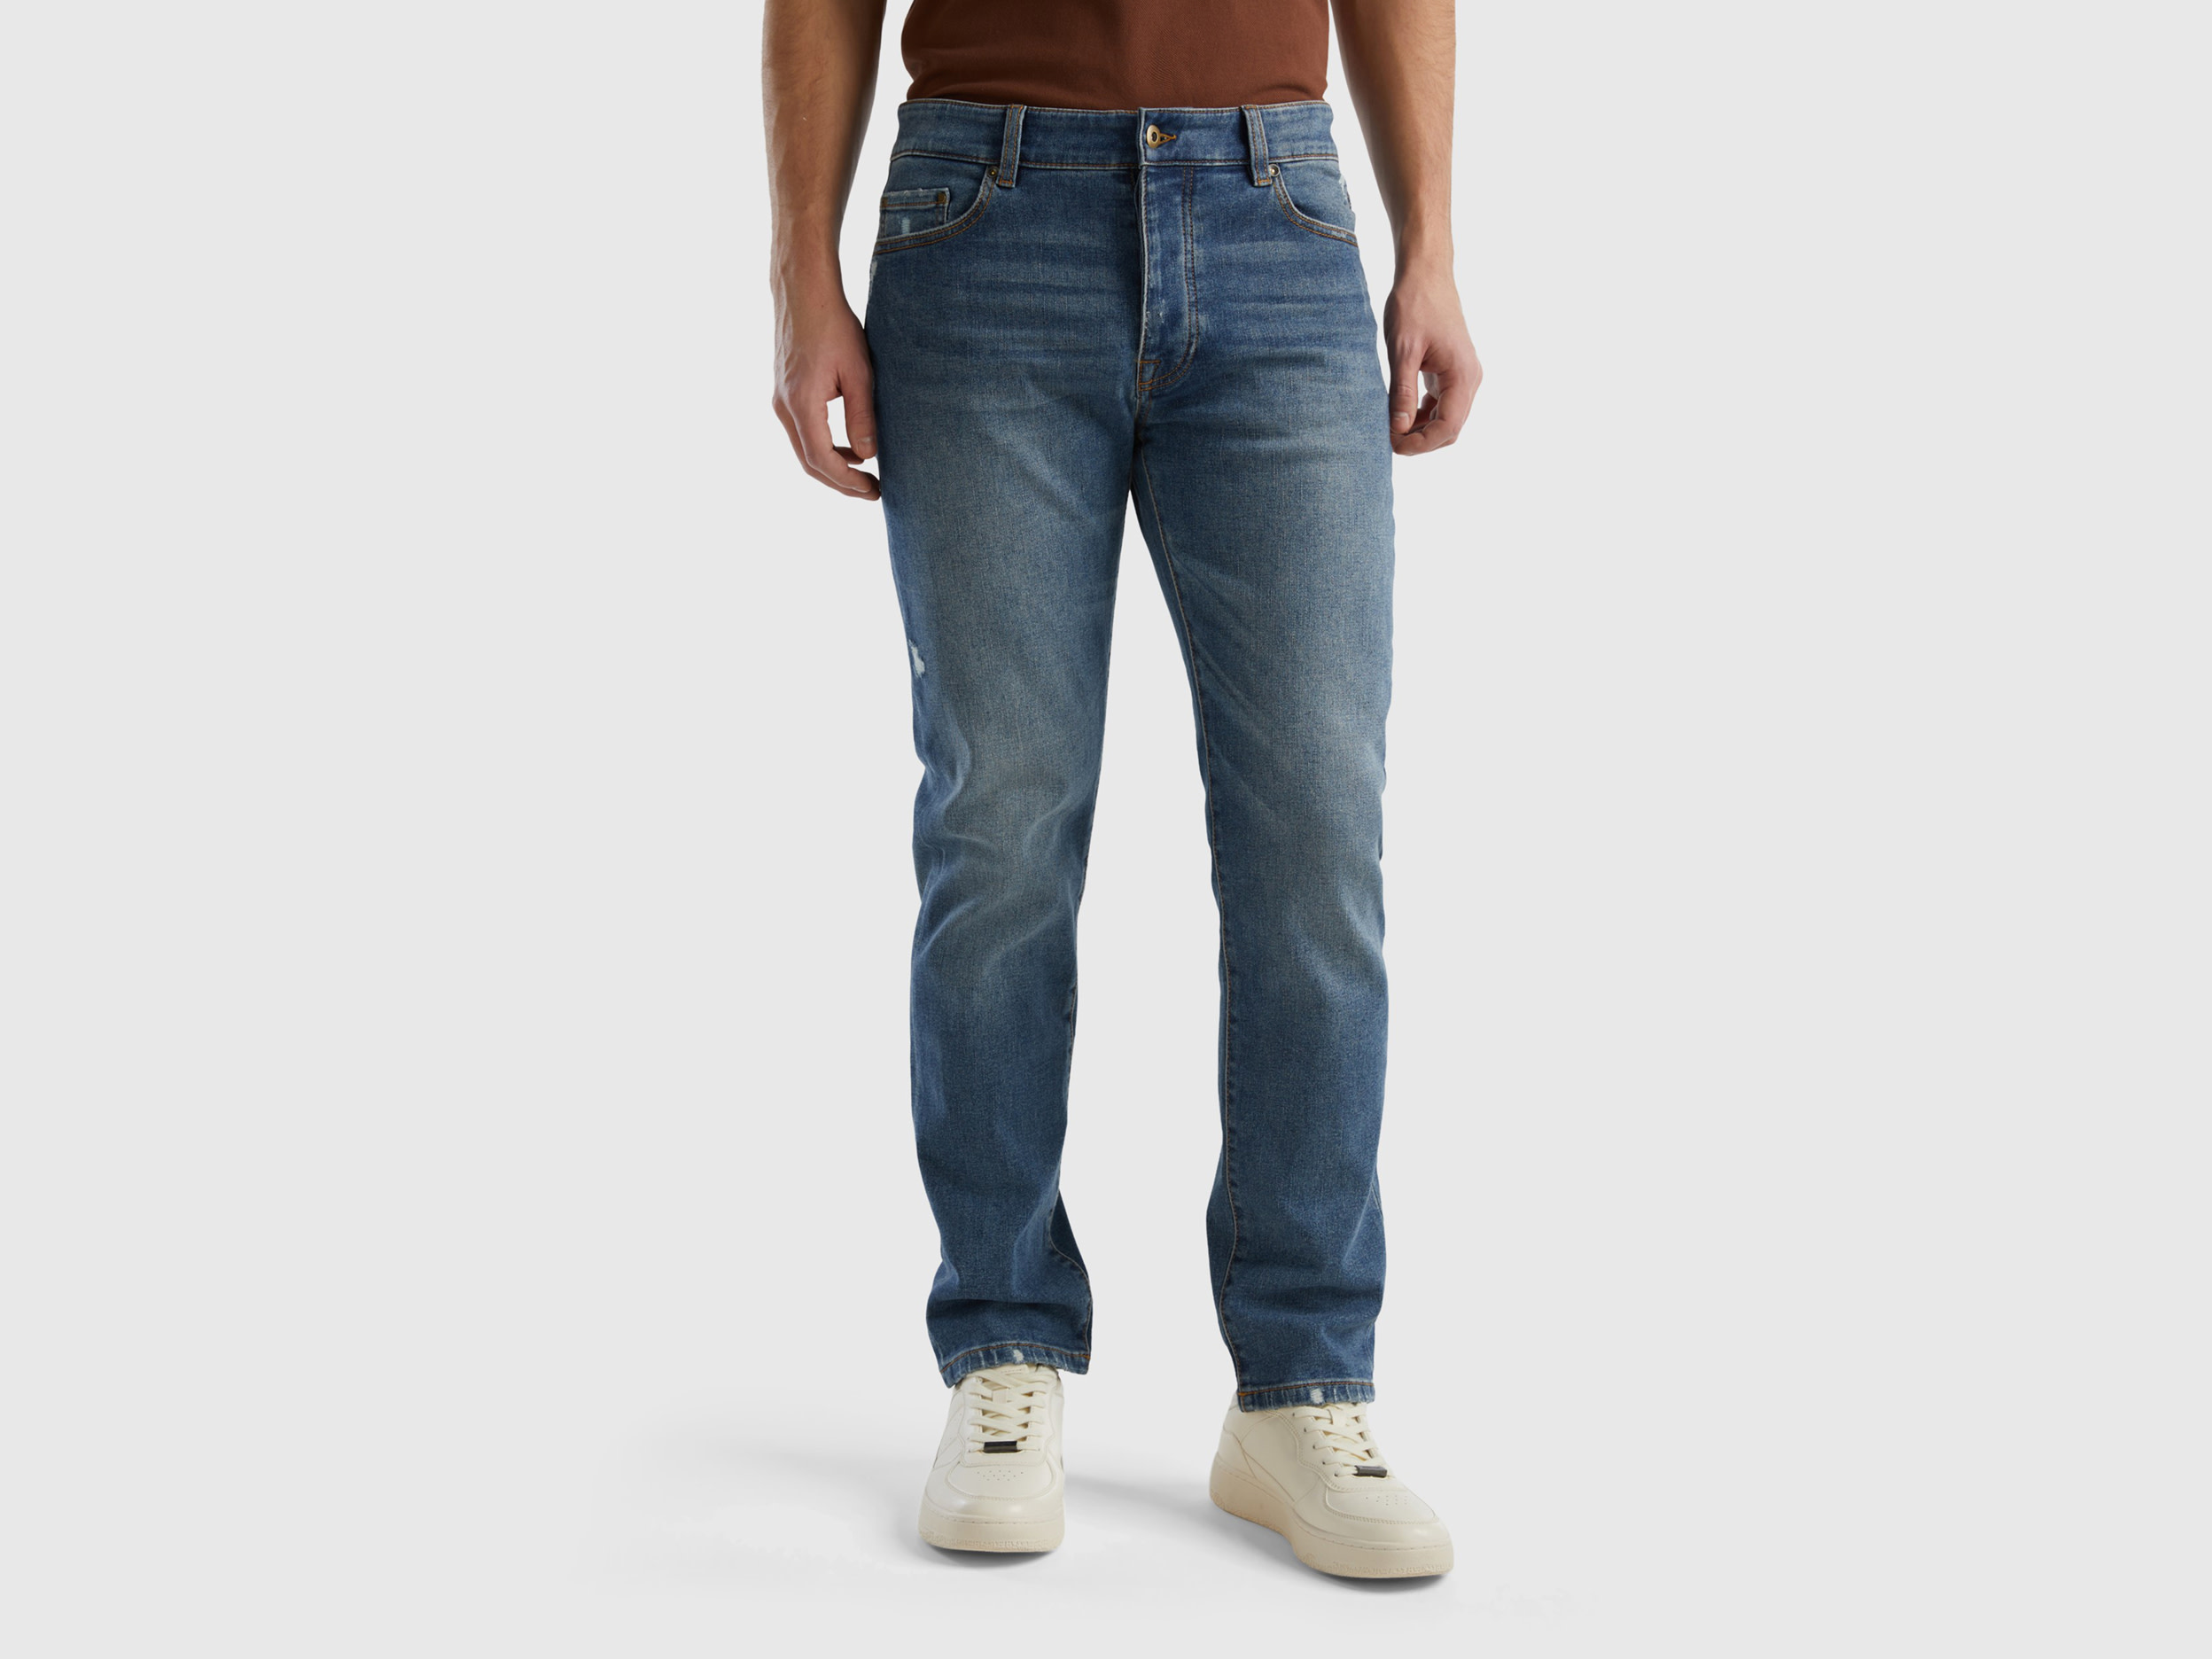 Benetton, Five Pocket Slim Fit Jeans, size 38, Dark Blue, Men